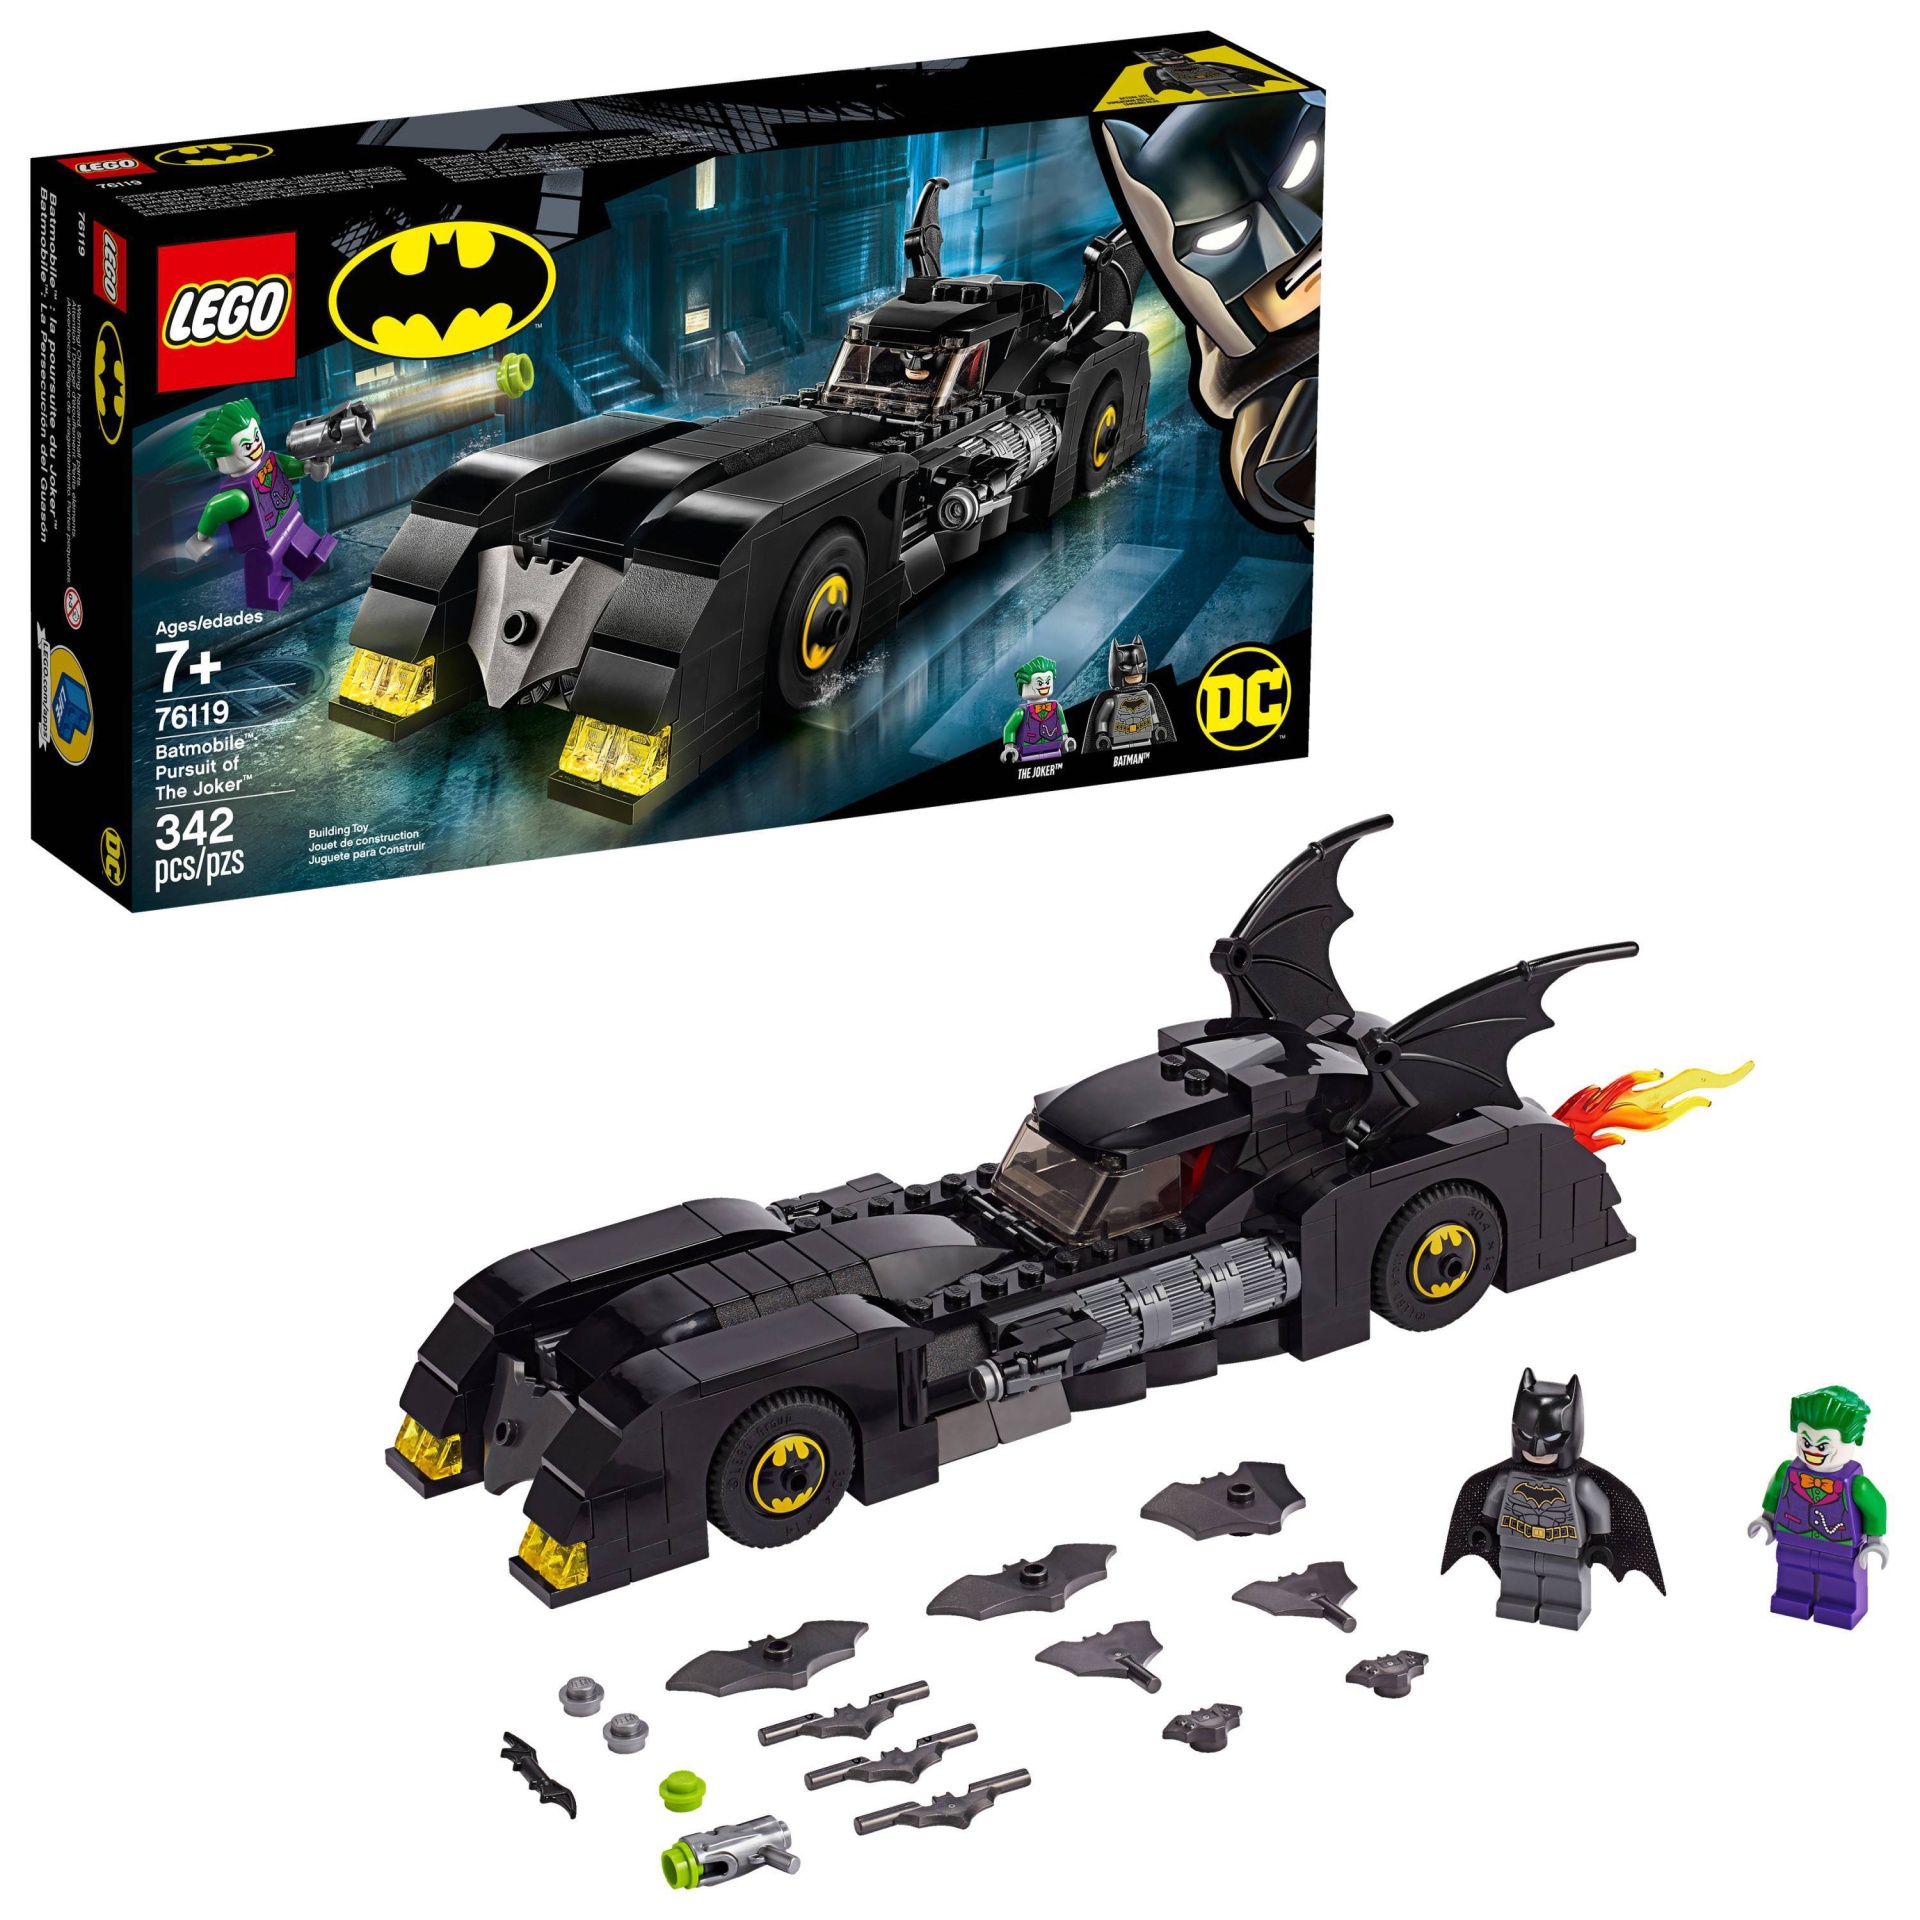 slide 1 of 1, LEGO Super Heroes DC Comics Batman Batmobile: Pursuit of The Joker 76119, 342 ct